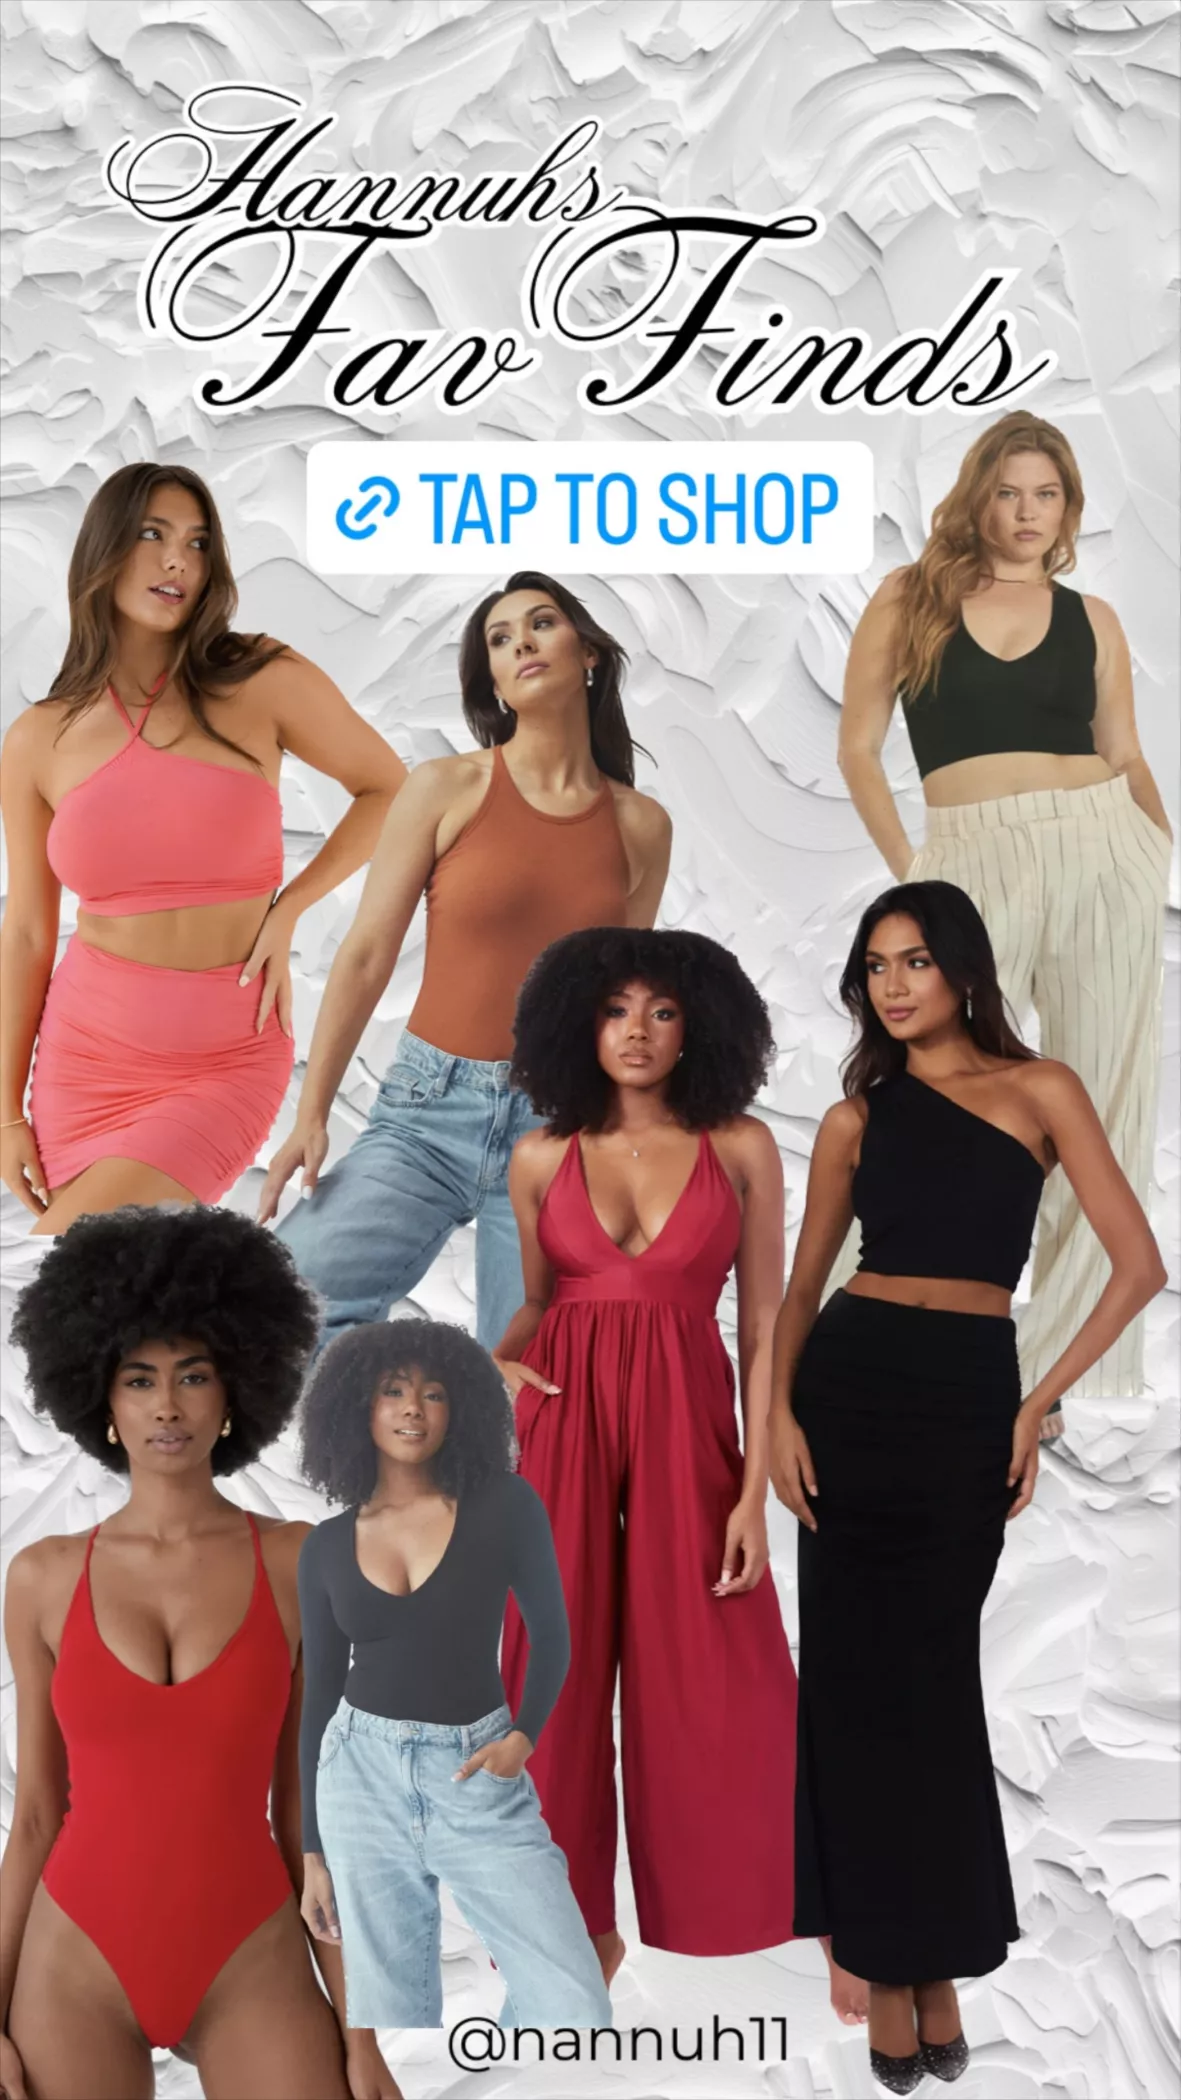 Black Friday bras, Shop exclusive deals & discounts